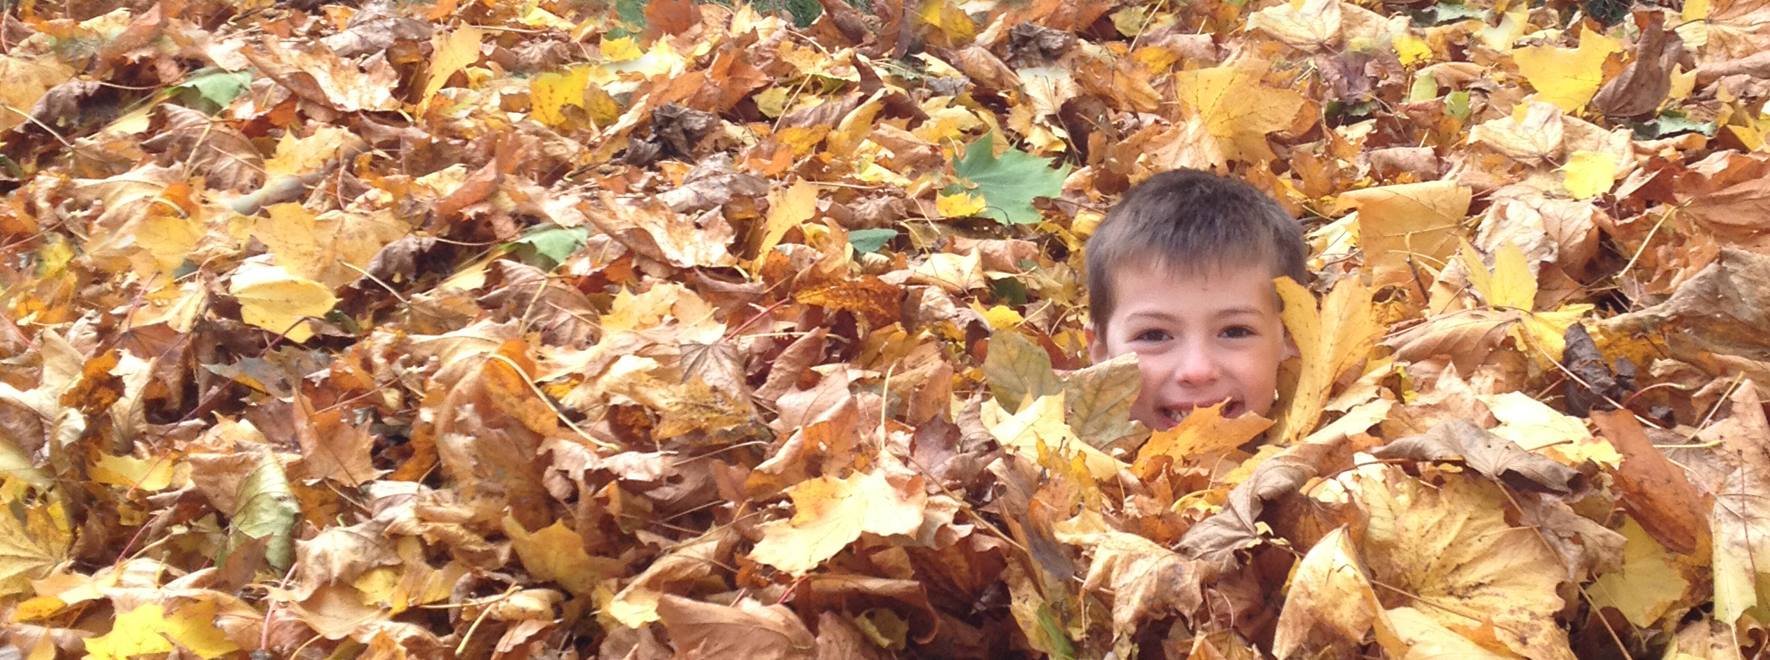 a boy hiding in autumn leaves